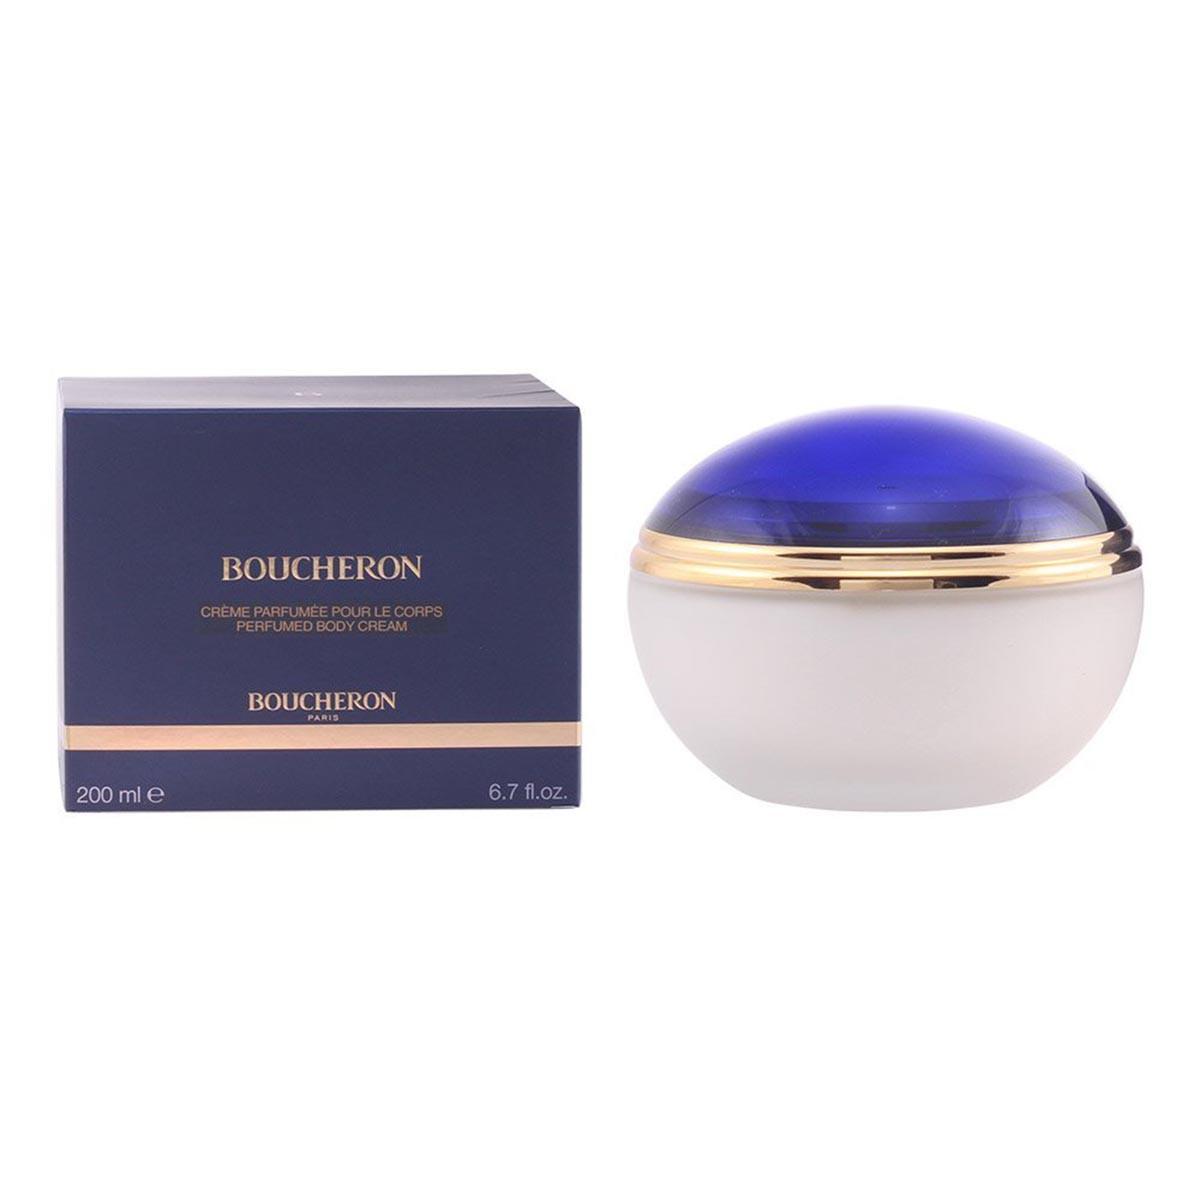 boucheron-perfumed-body-cream-200ml